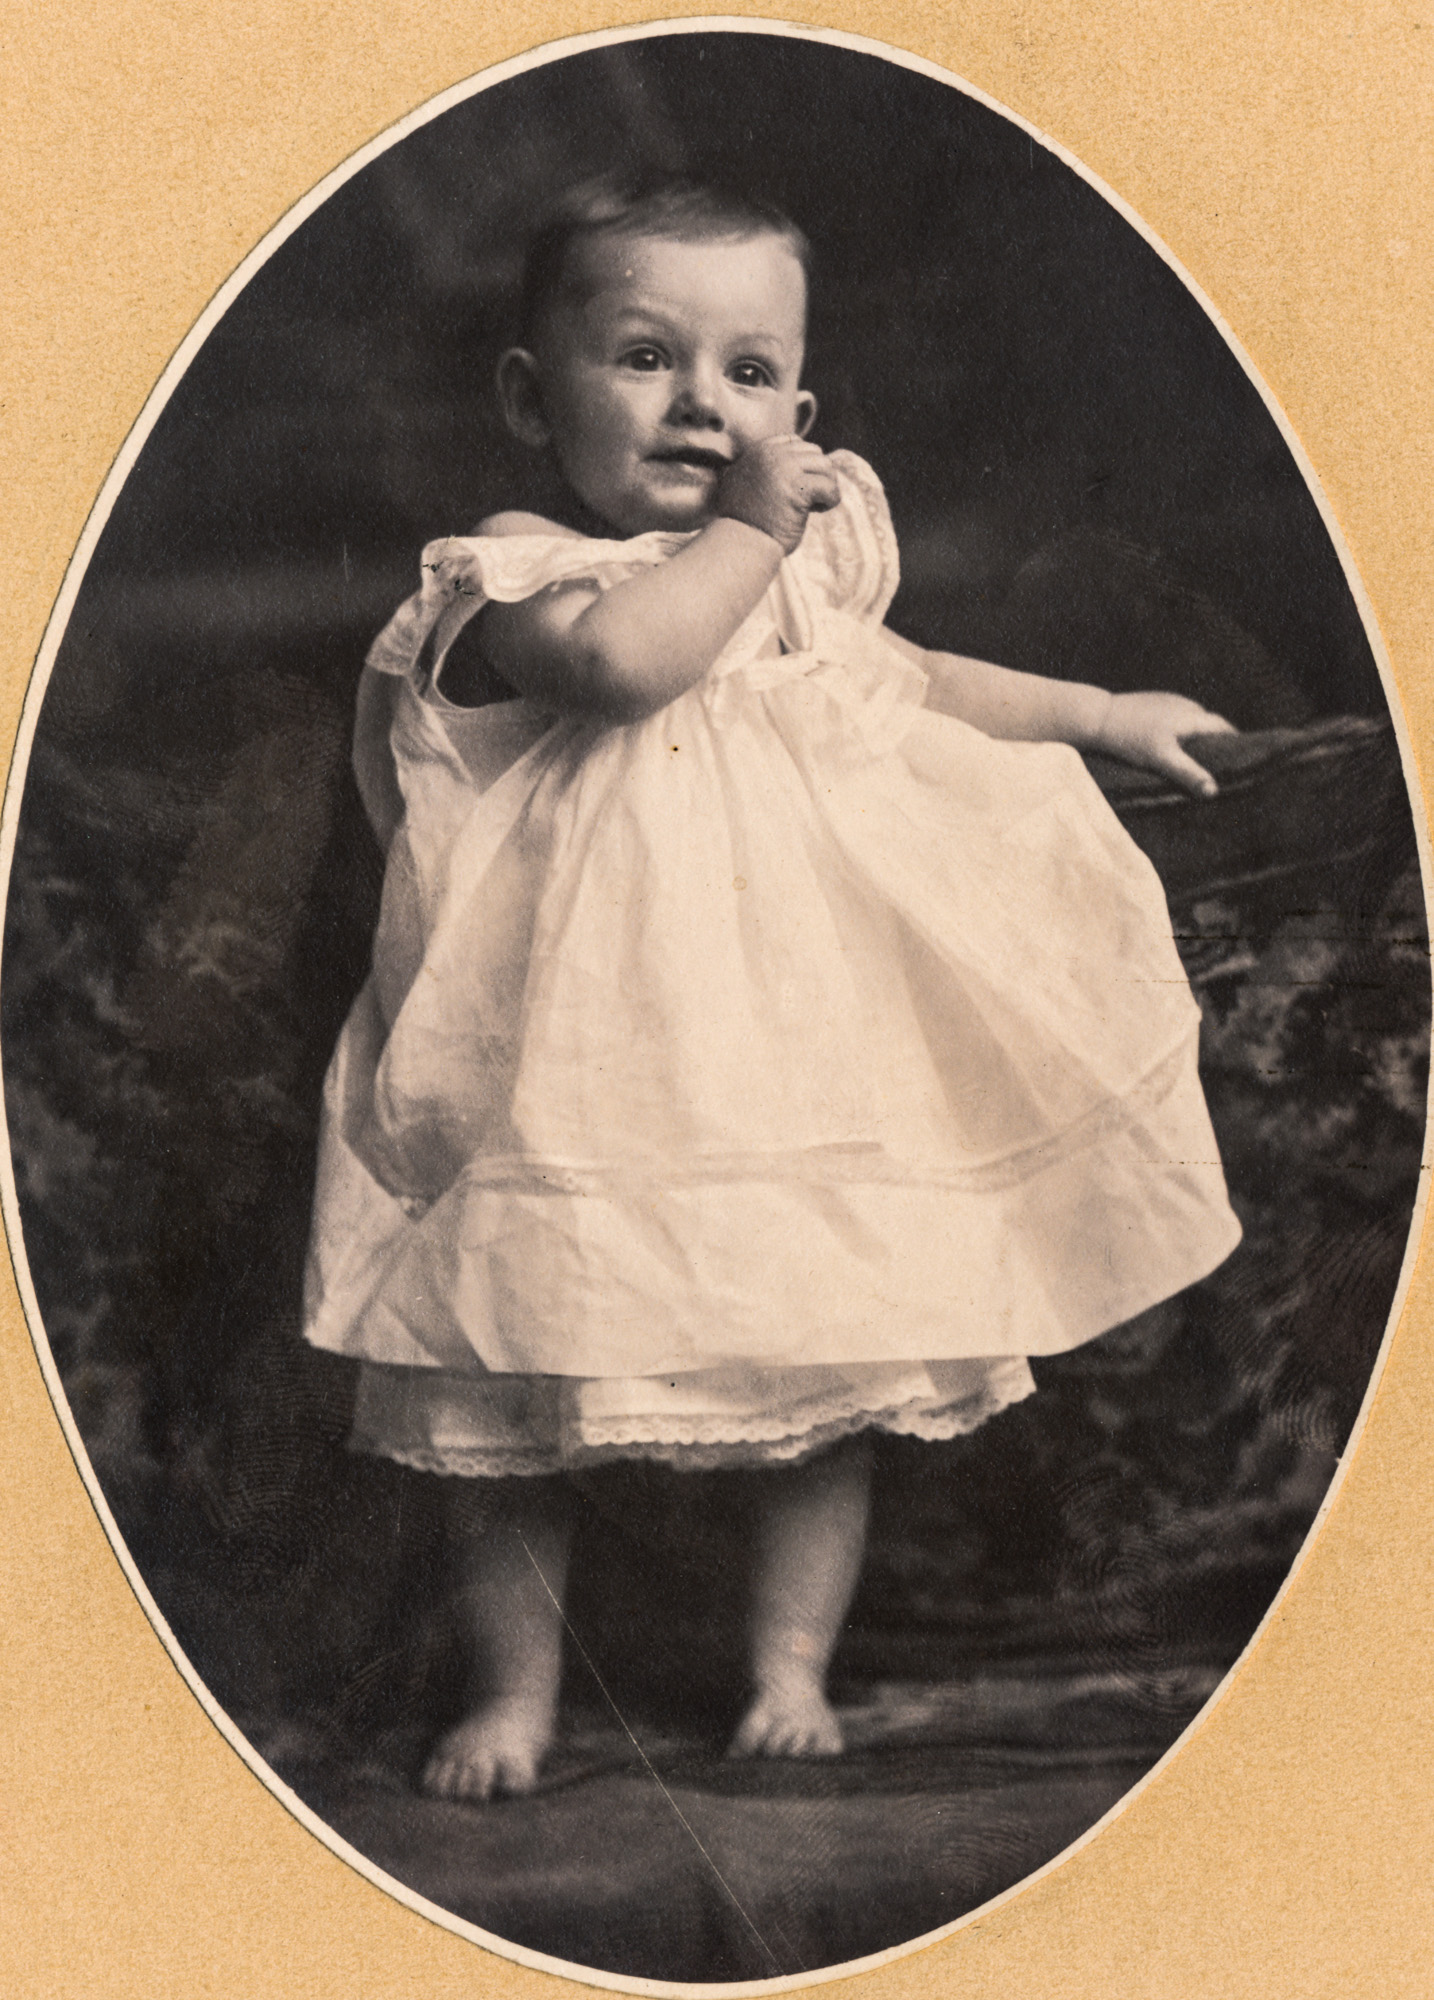 Dauth Family Archive - Circa 1905 - June Dauth Baby Photo Wearing Dress